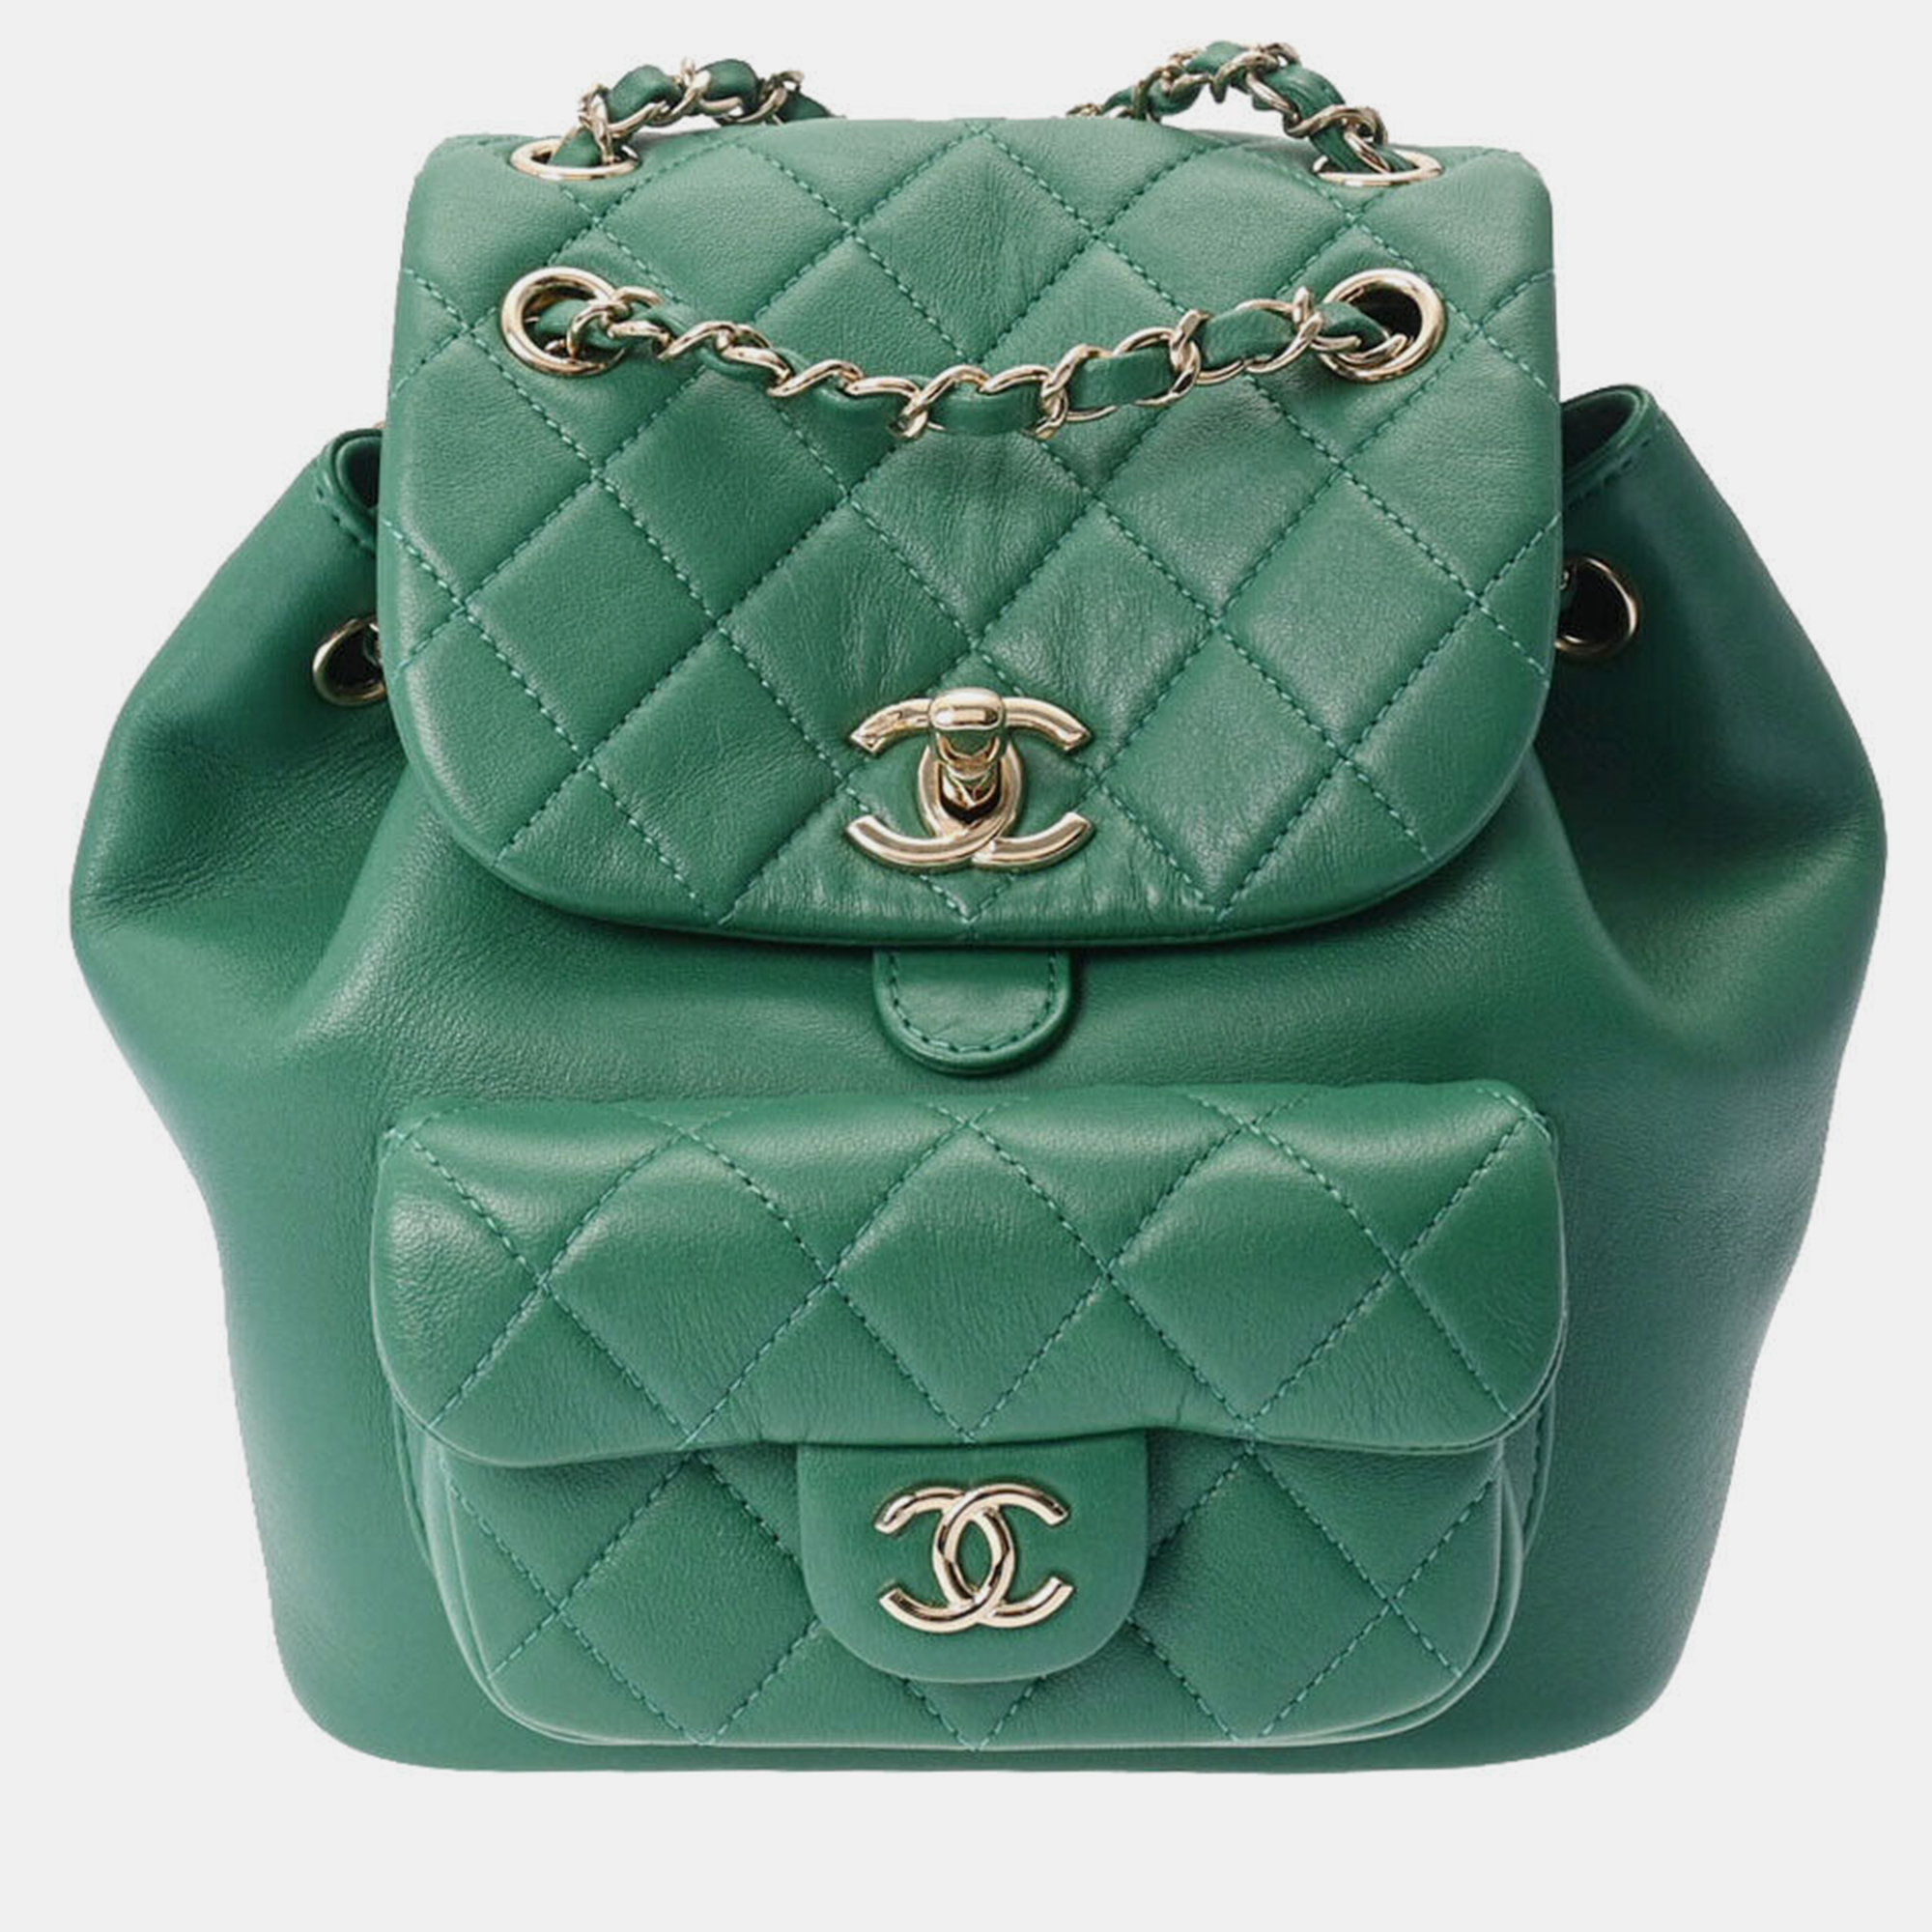 Chanel green leather duma backpack